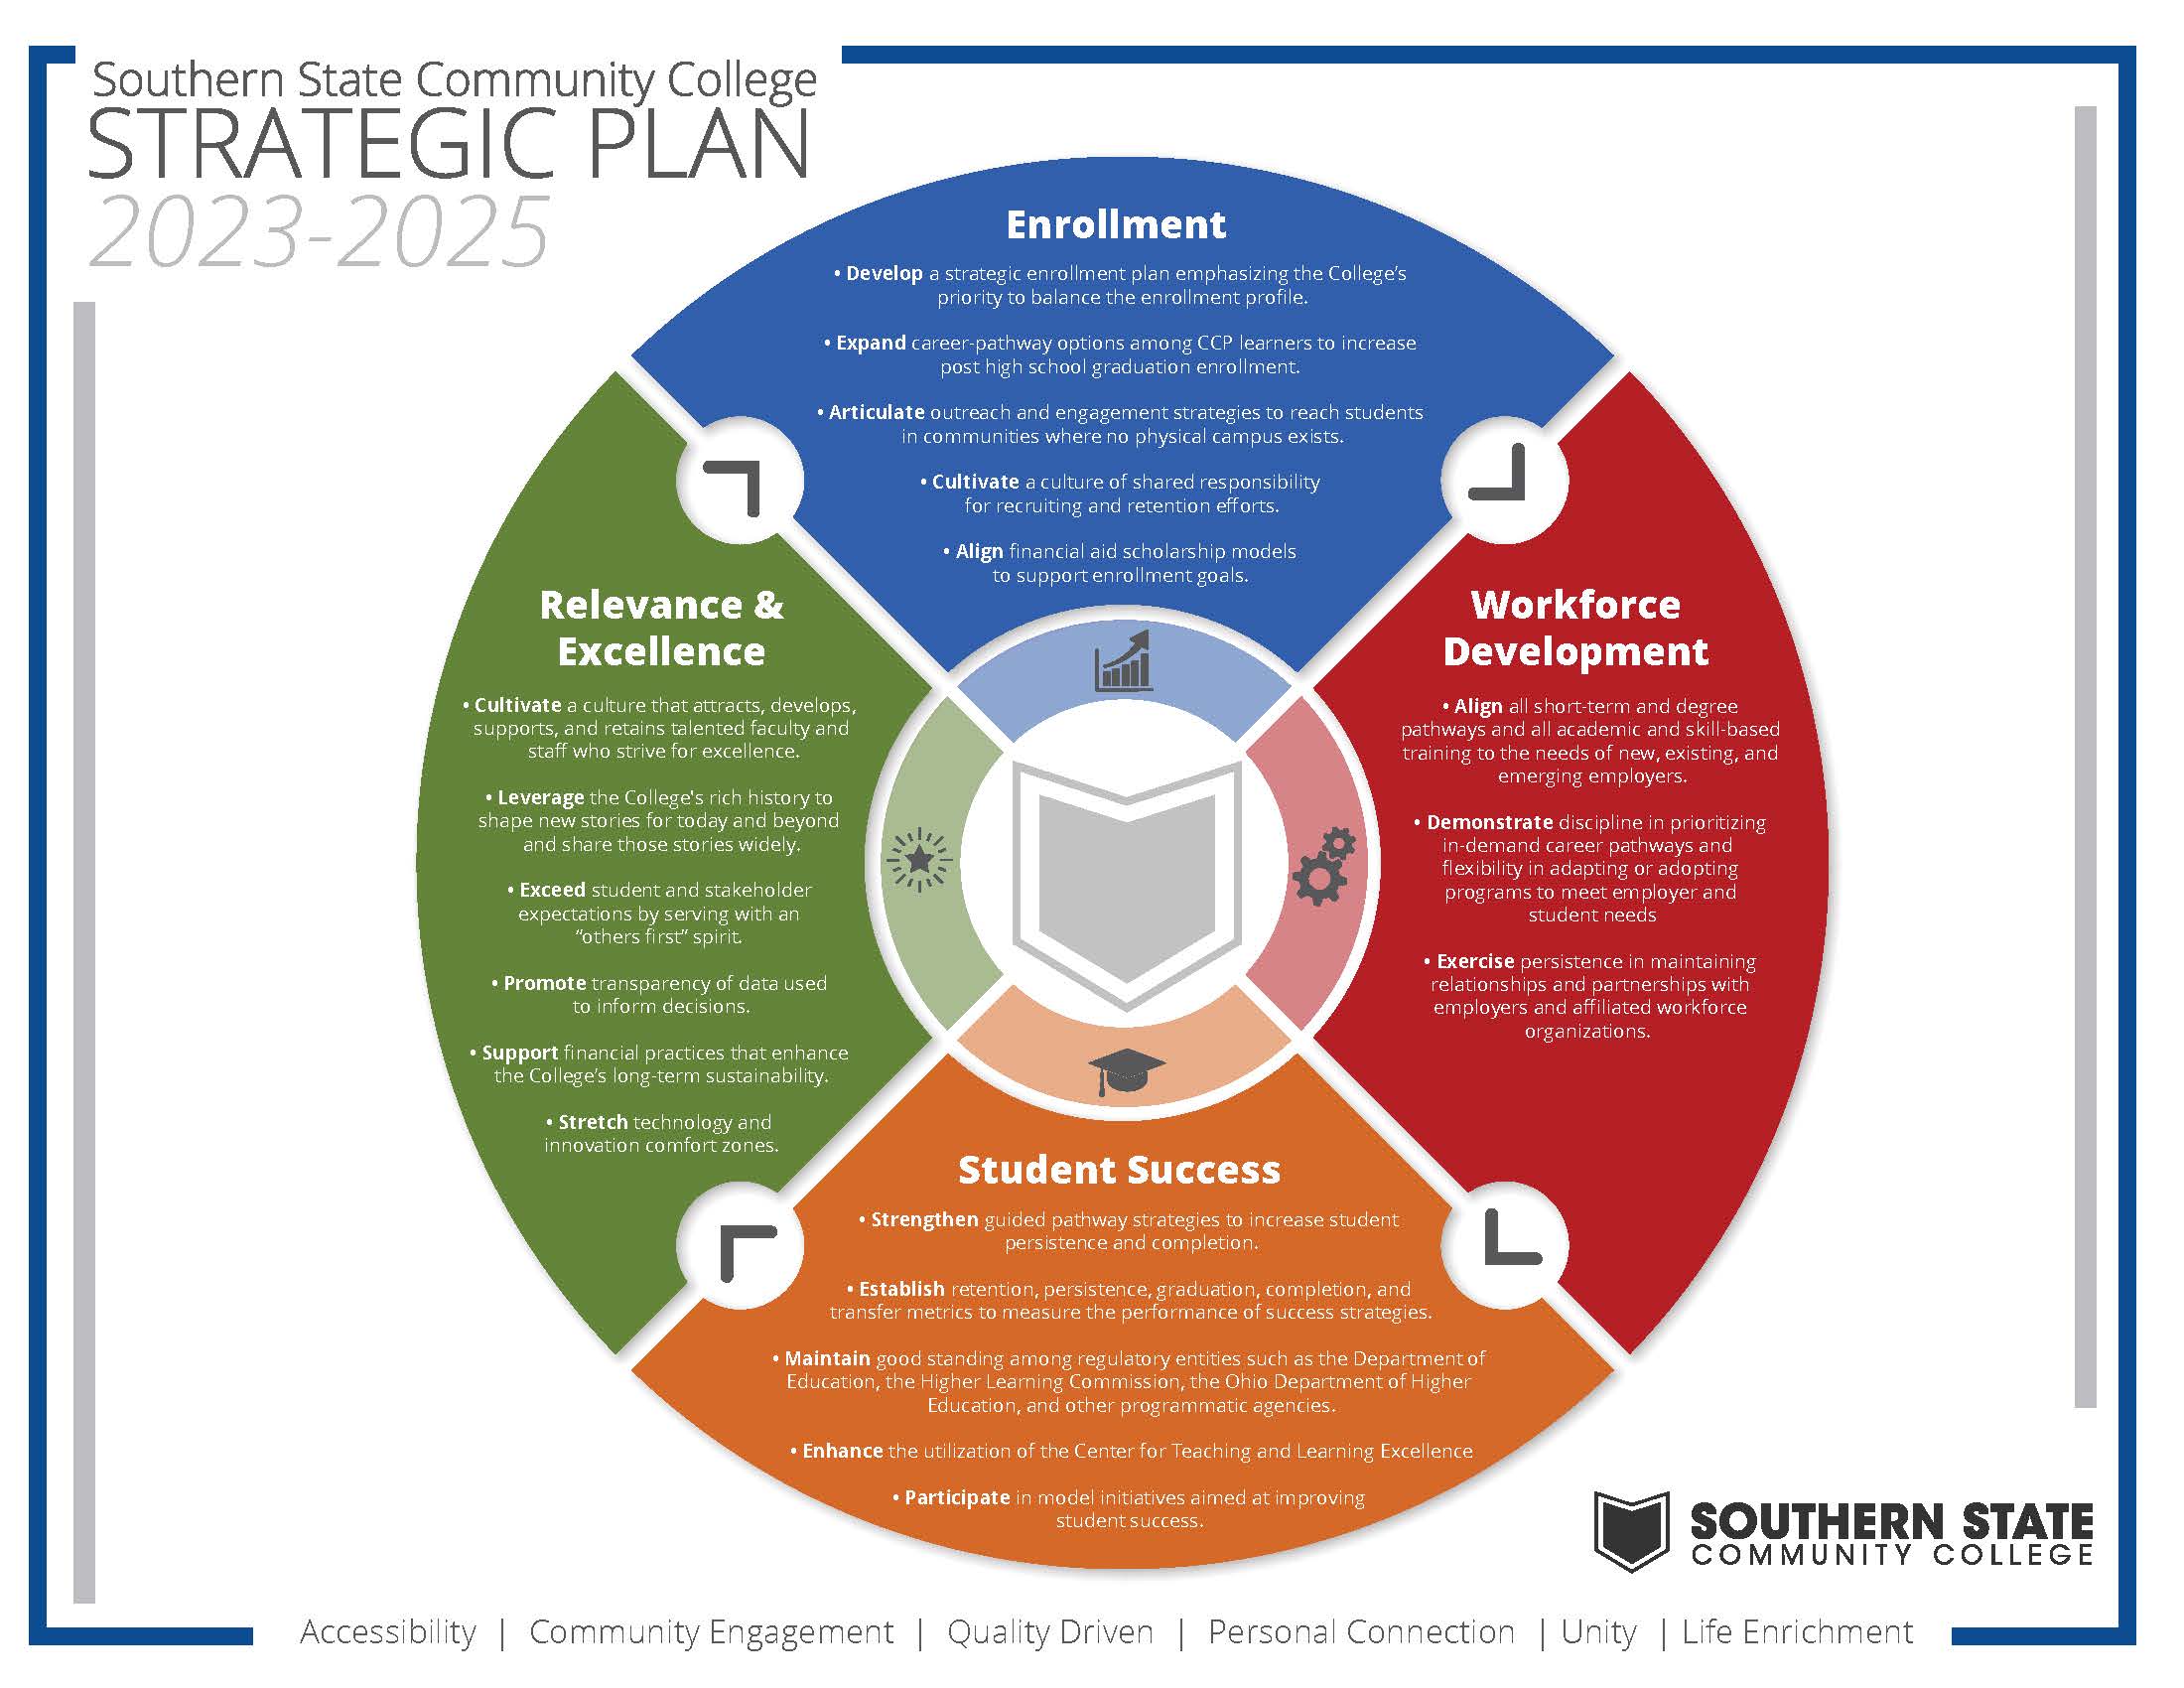 Southern State's Strategic Plan